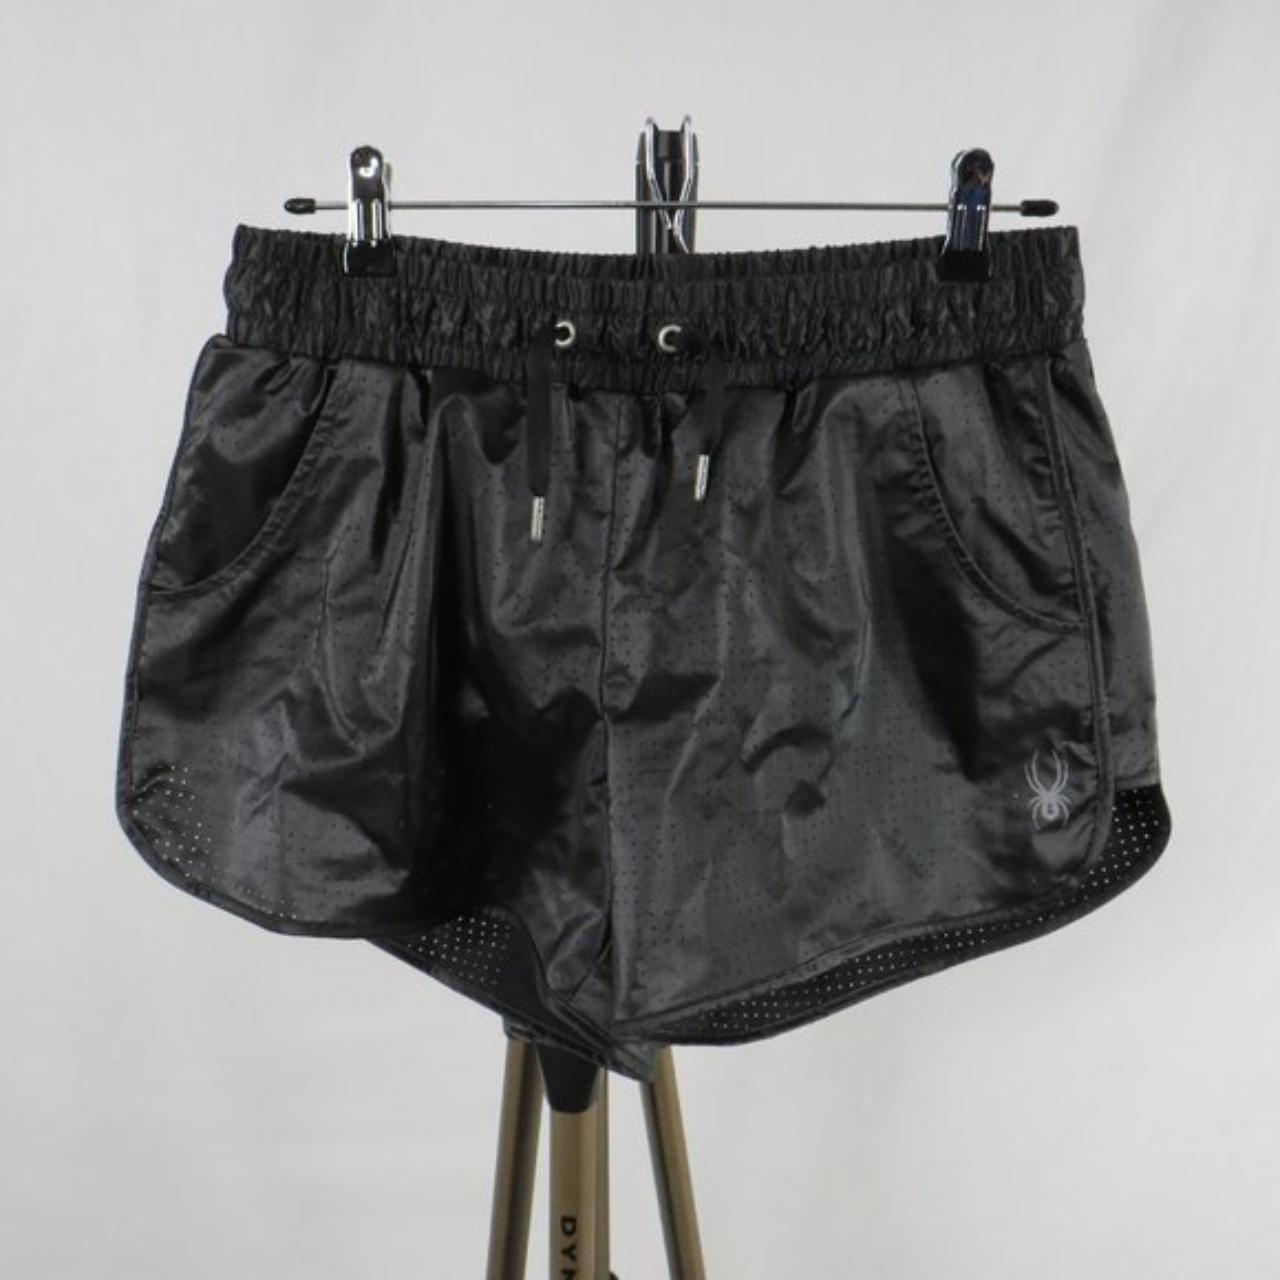 Rare Black Spyder shorts with drawstring waist and 2... - Depop